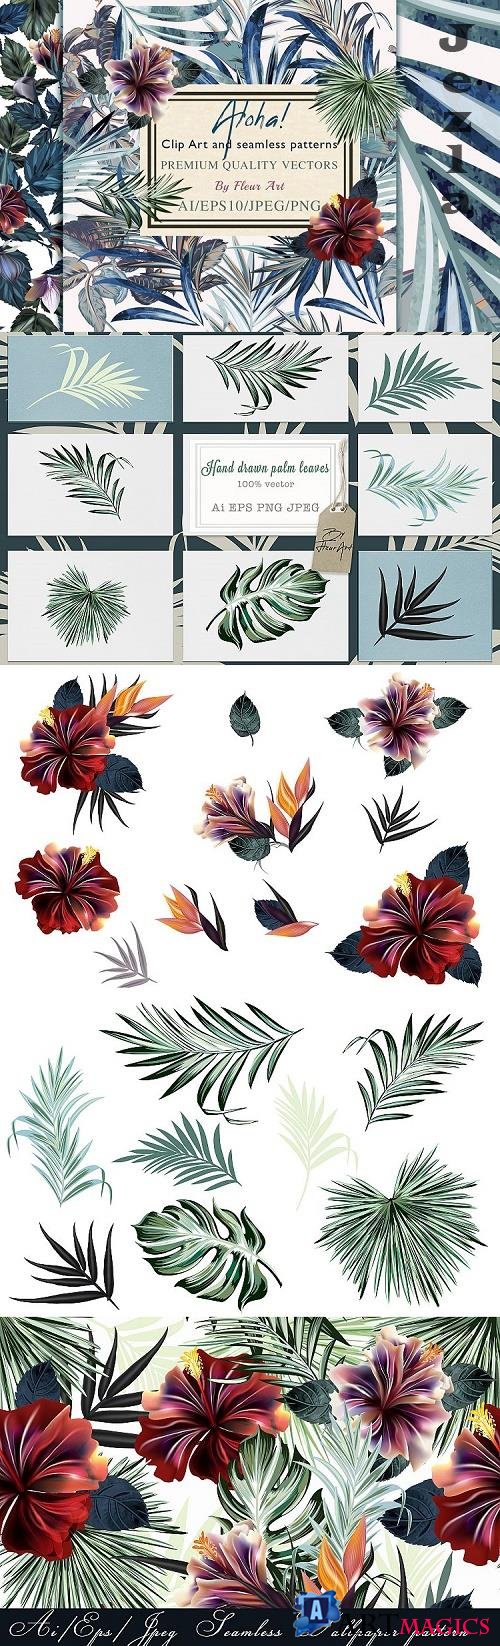 Tropical vector hibiscus illustrations set  - 522956